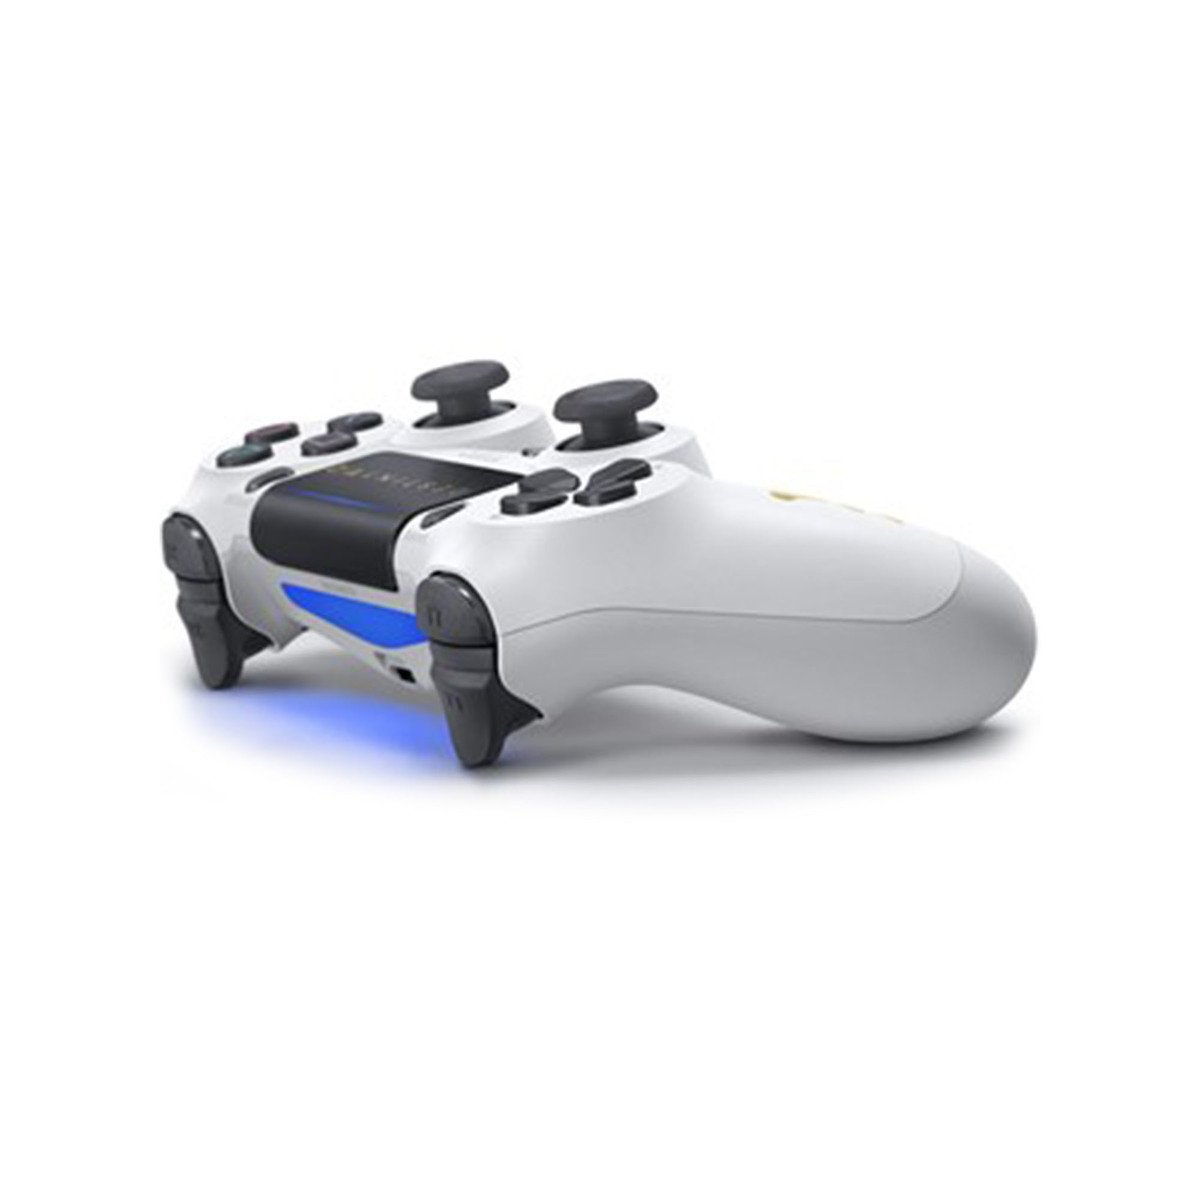 Sony PlayStation Destiny2 DualShock 4 Wireless Controller White